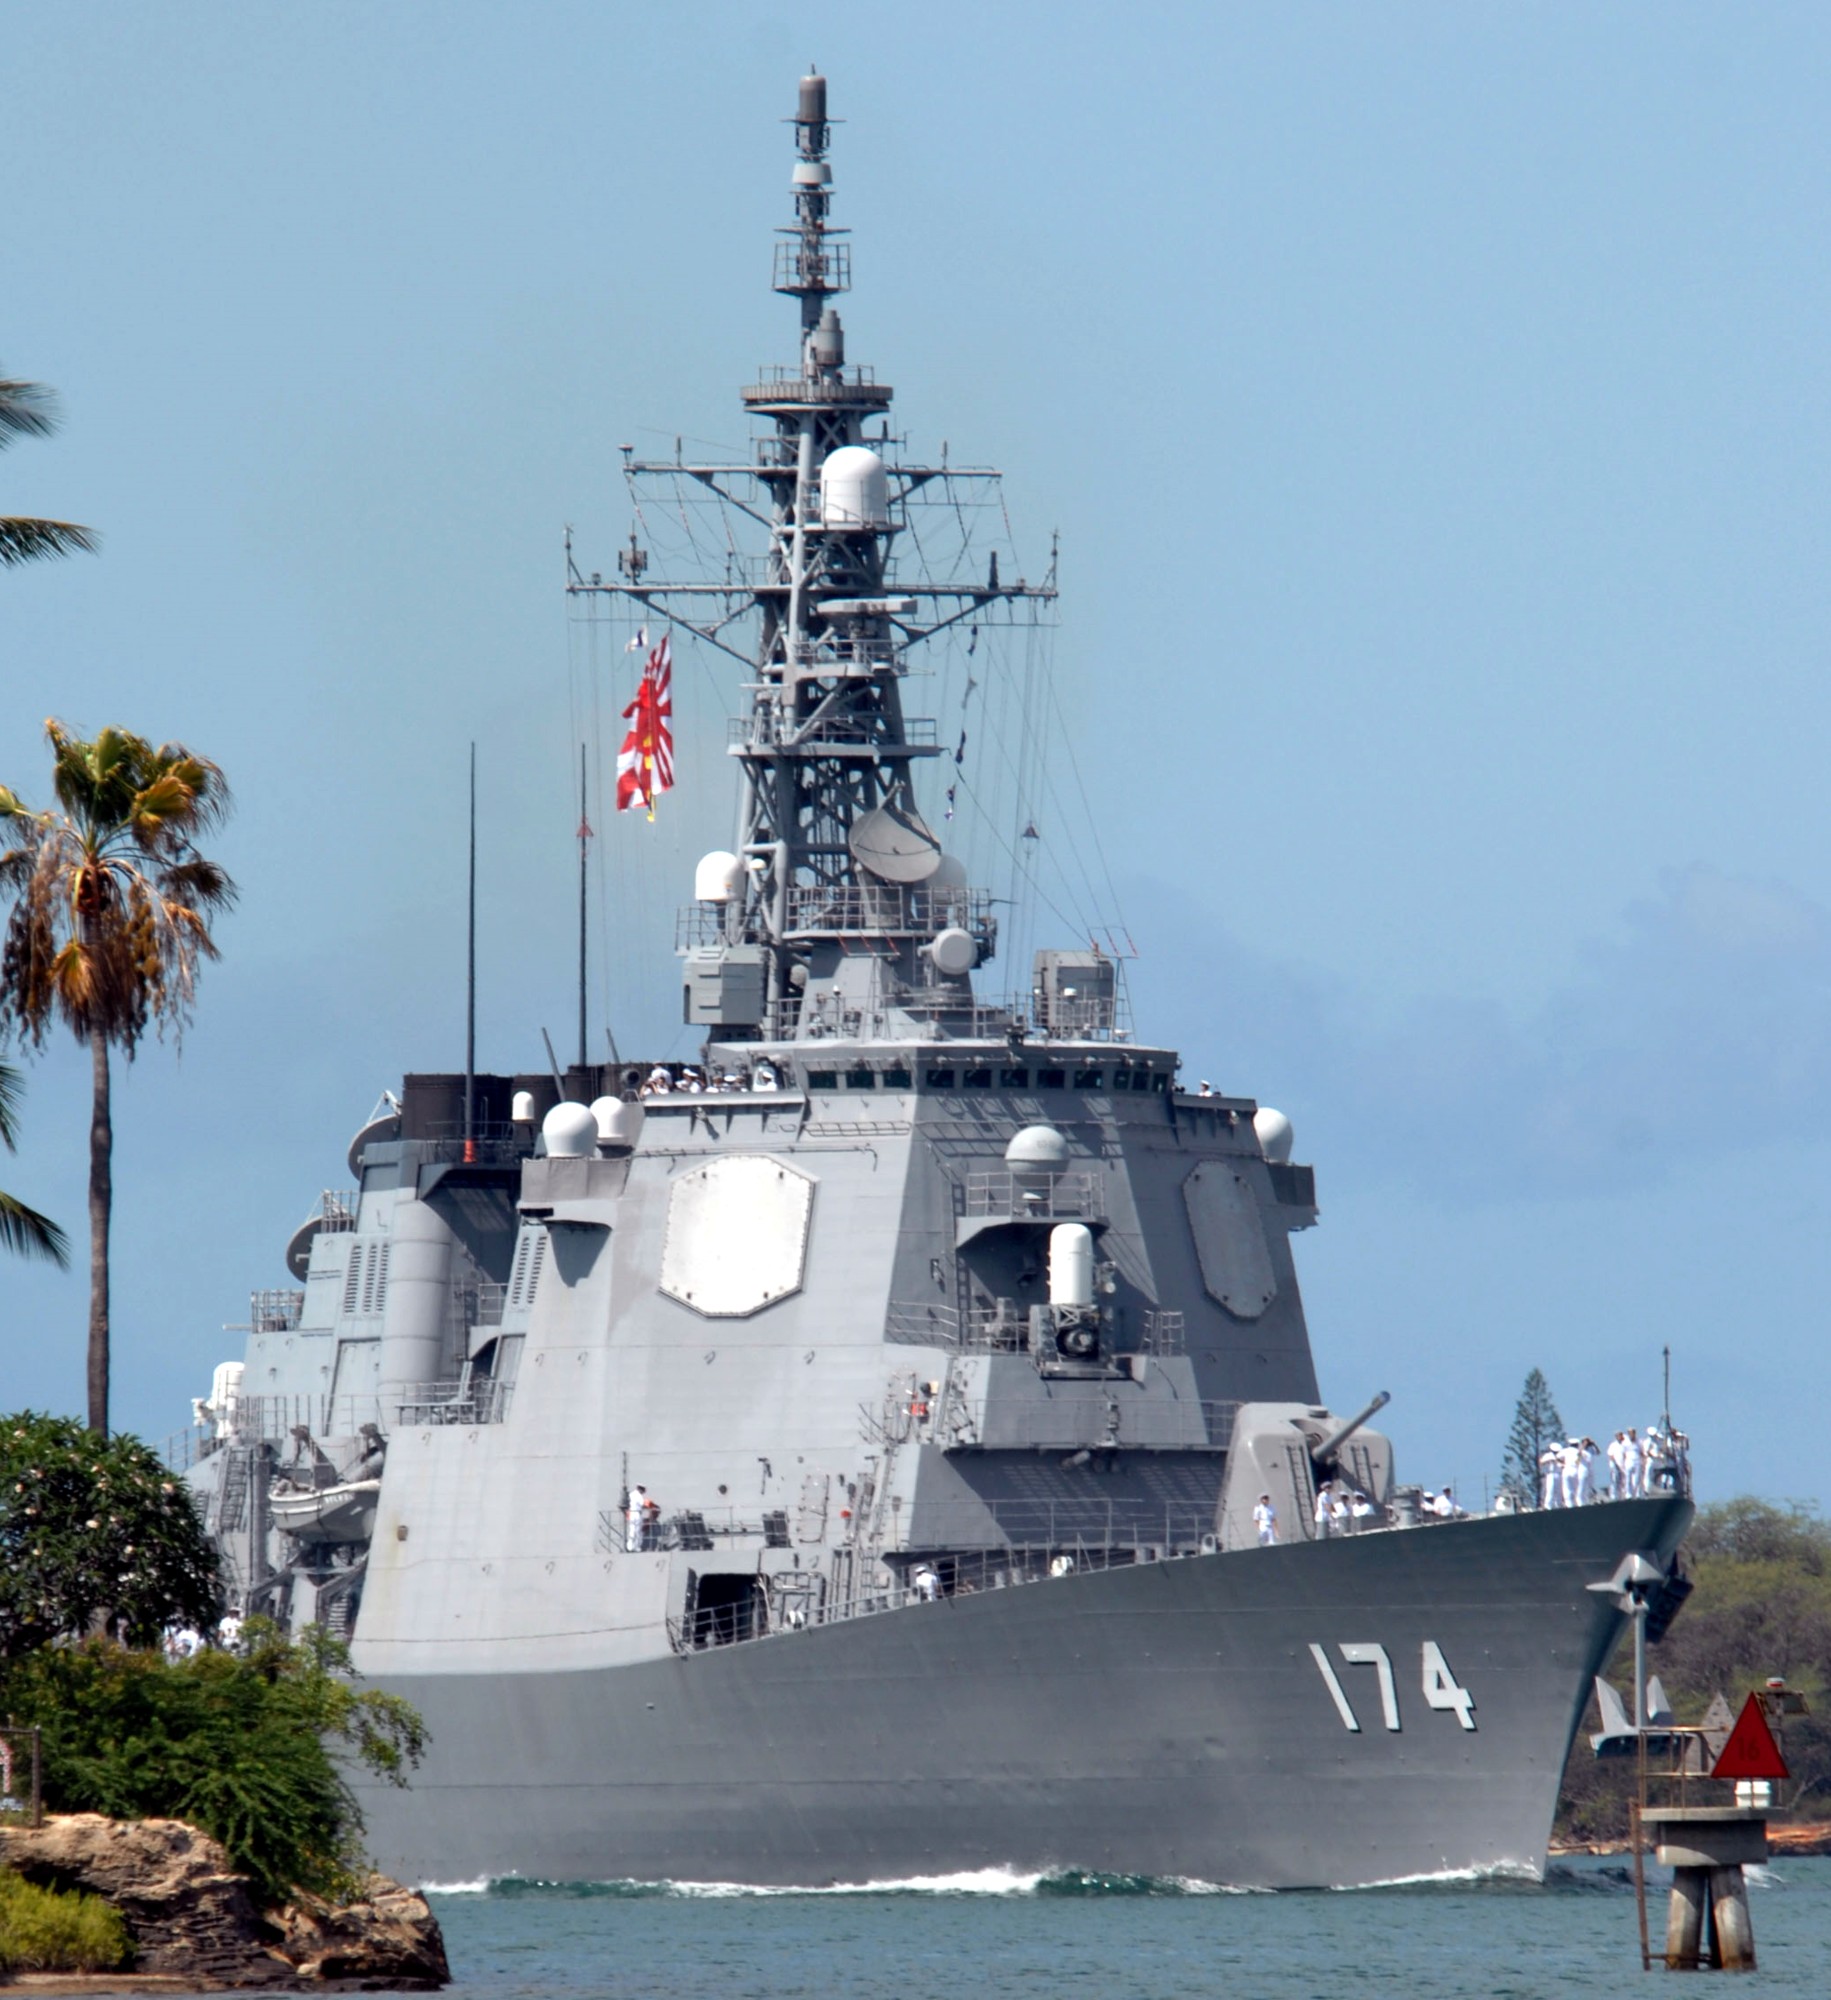 ddg-174 jds kirishima kongou class destroyer japan maritime self defense force jmsdf 26